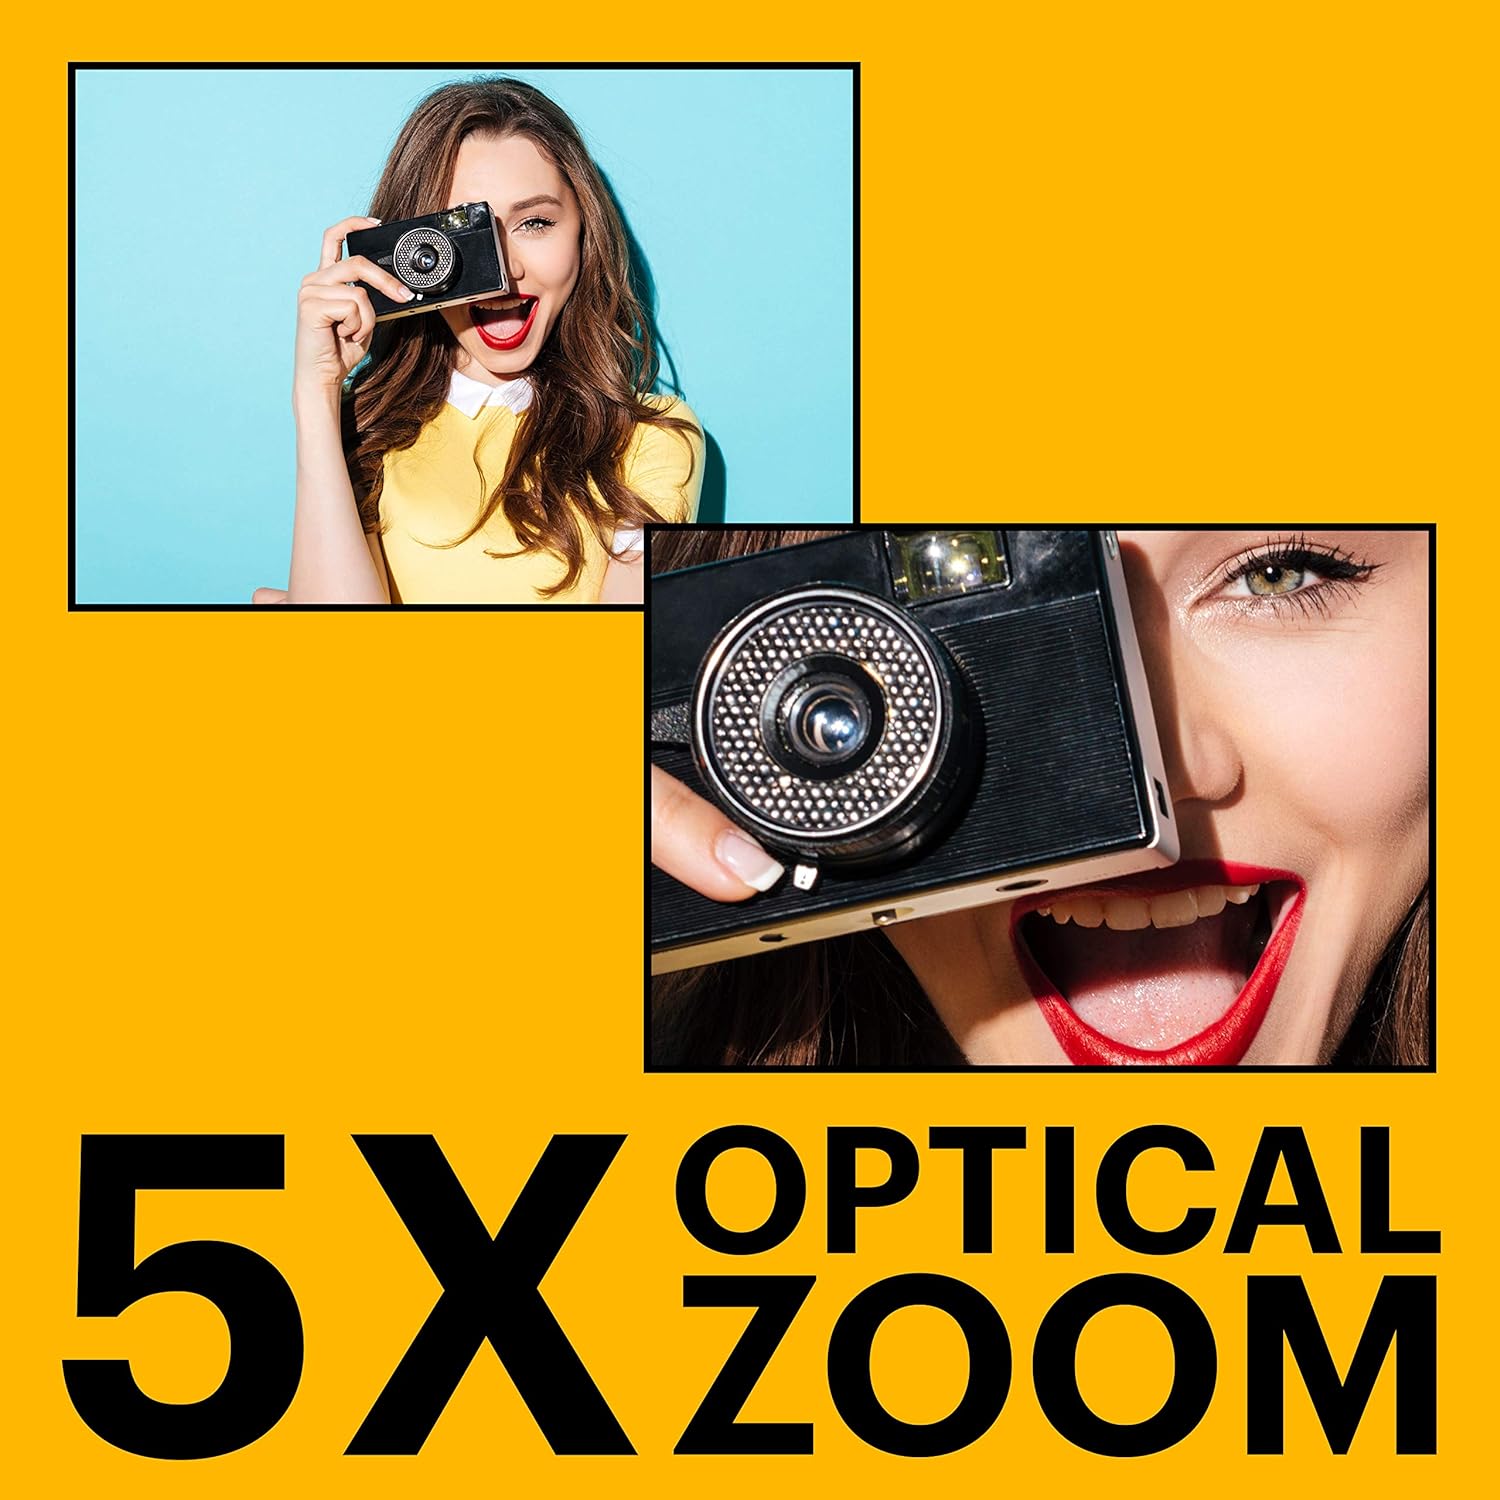 KODAK PIXPRO FZ55-BK 16MP Digital Camera 5X Optical Zoom 28mm Wide Angle 1080P Full HD Video 2.7